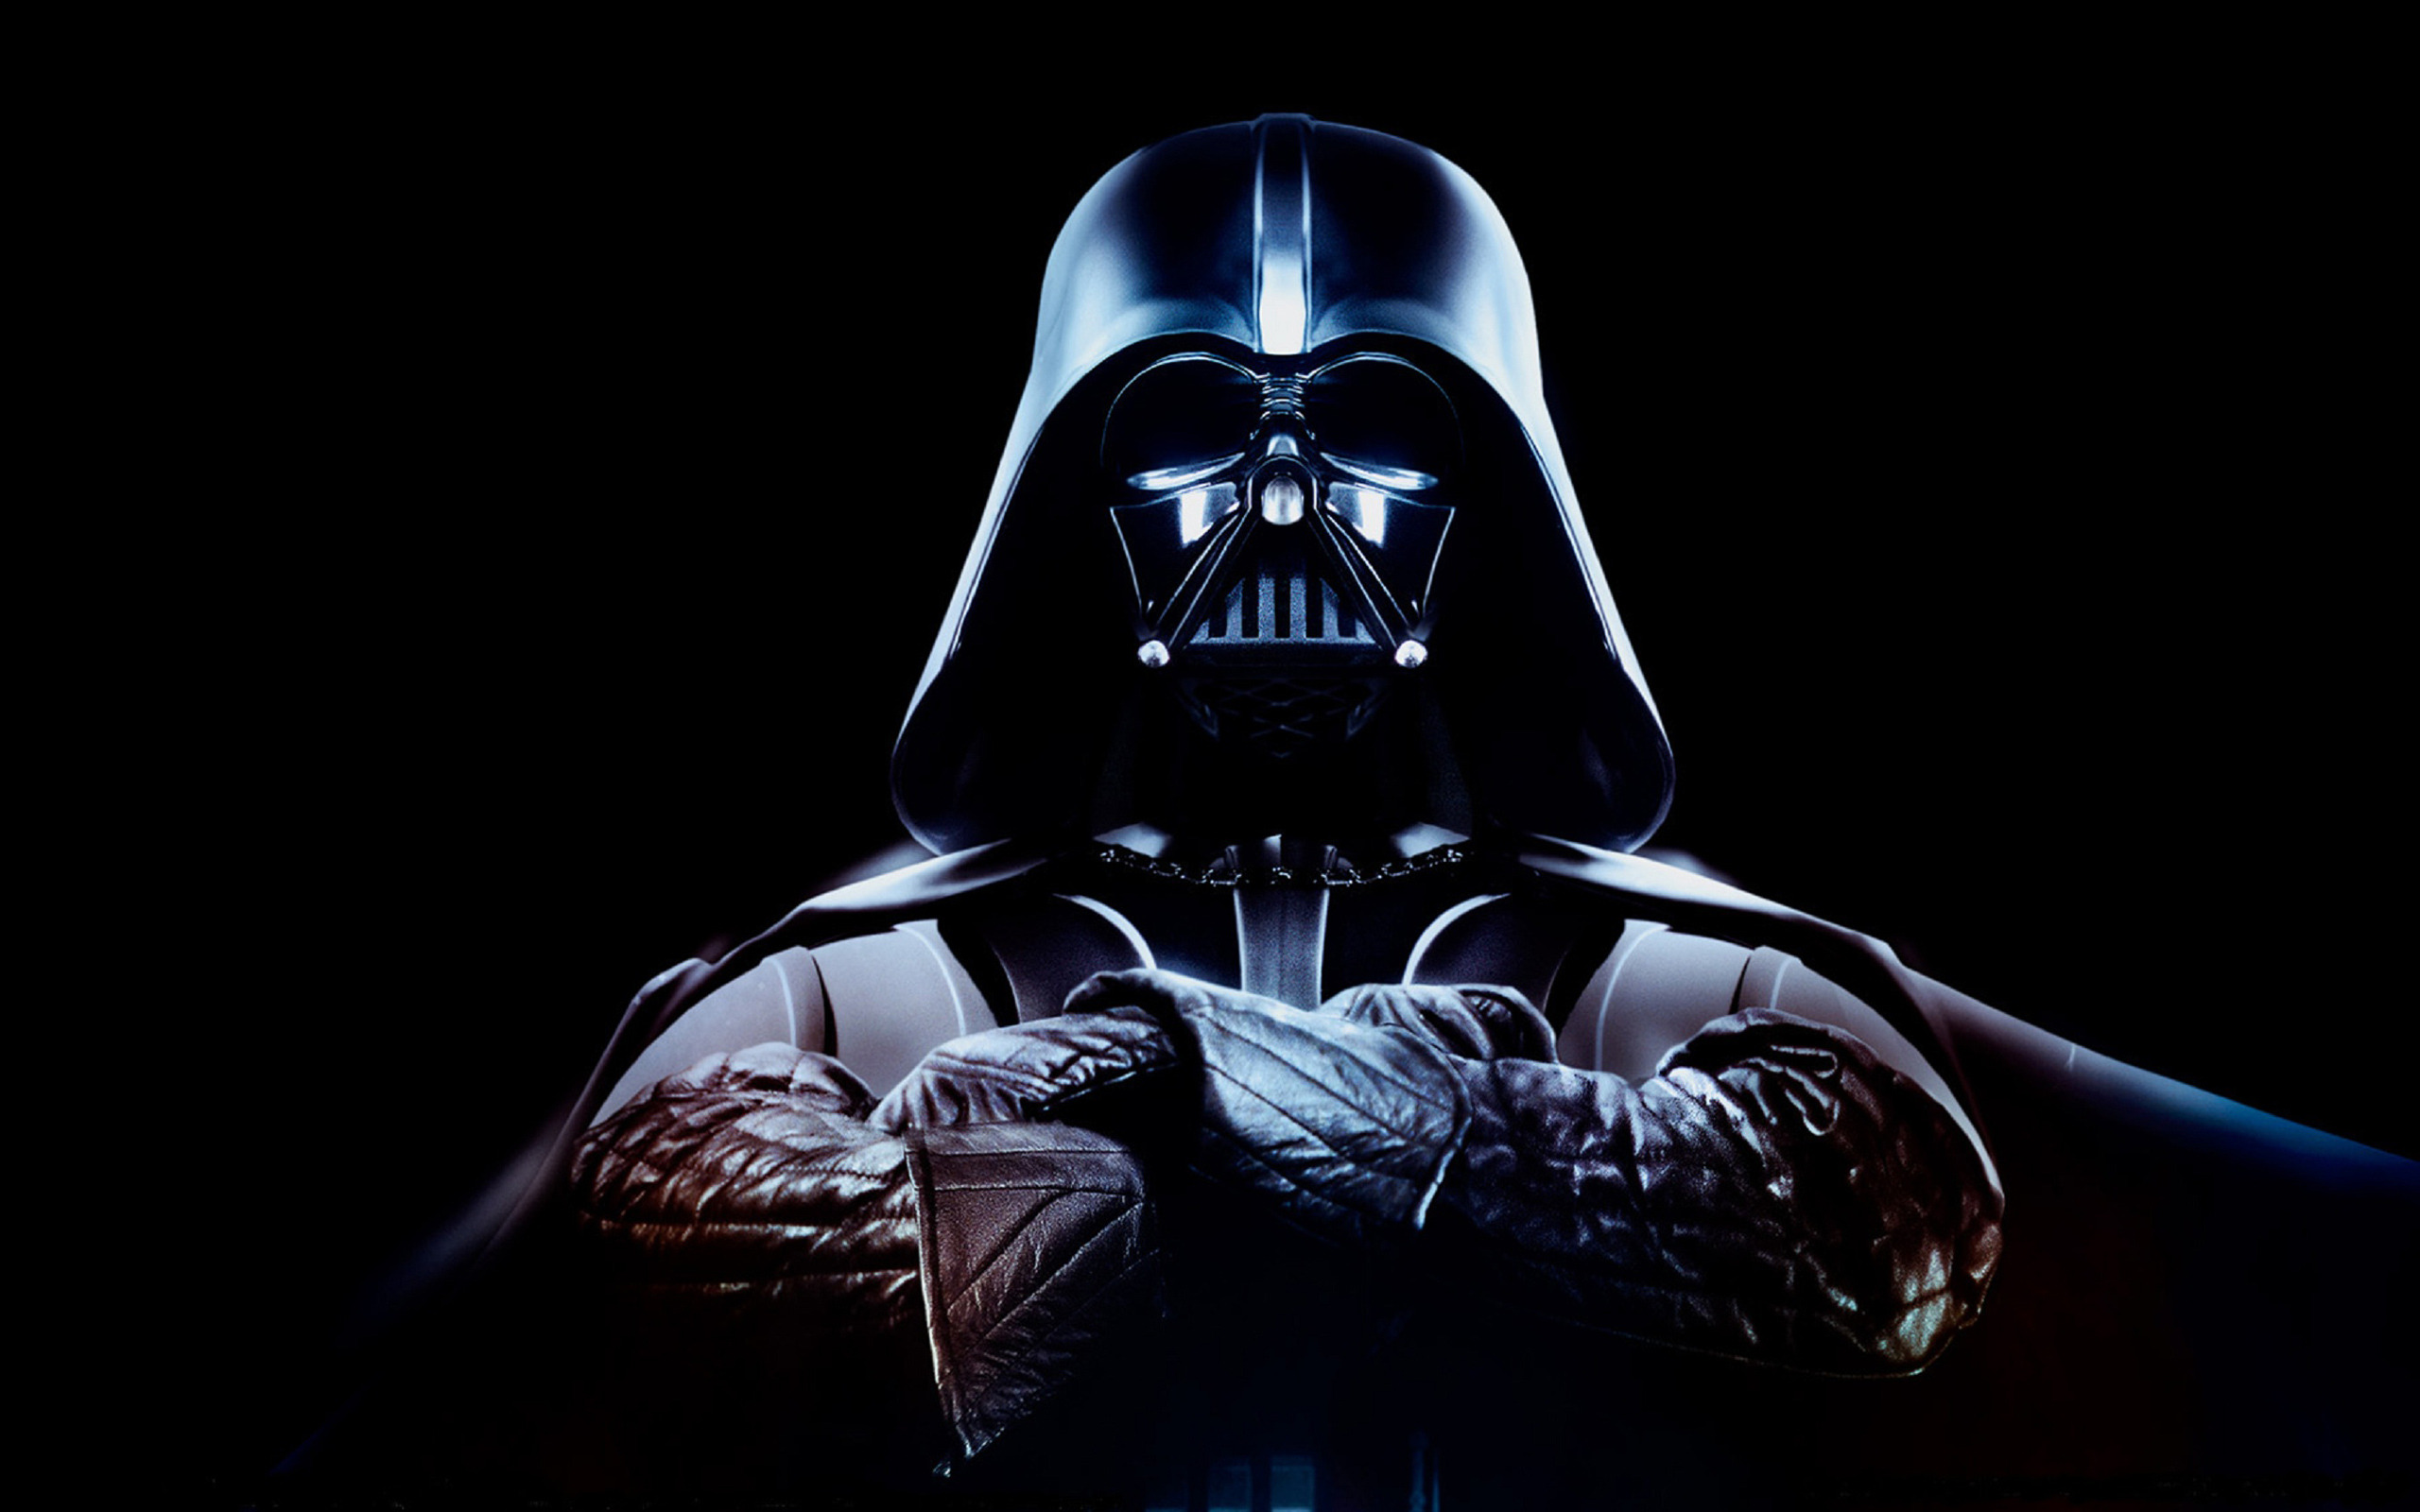 Fotos 360 del casco Darth Vader (II) #VidePan #FacetheForce #StarWars #Madrid